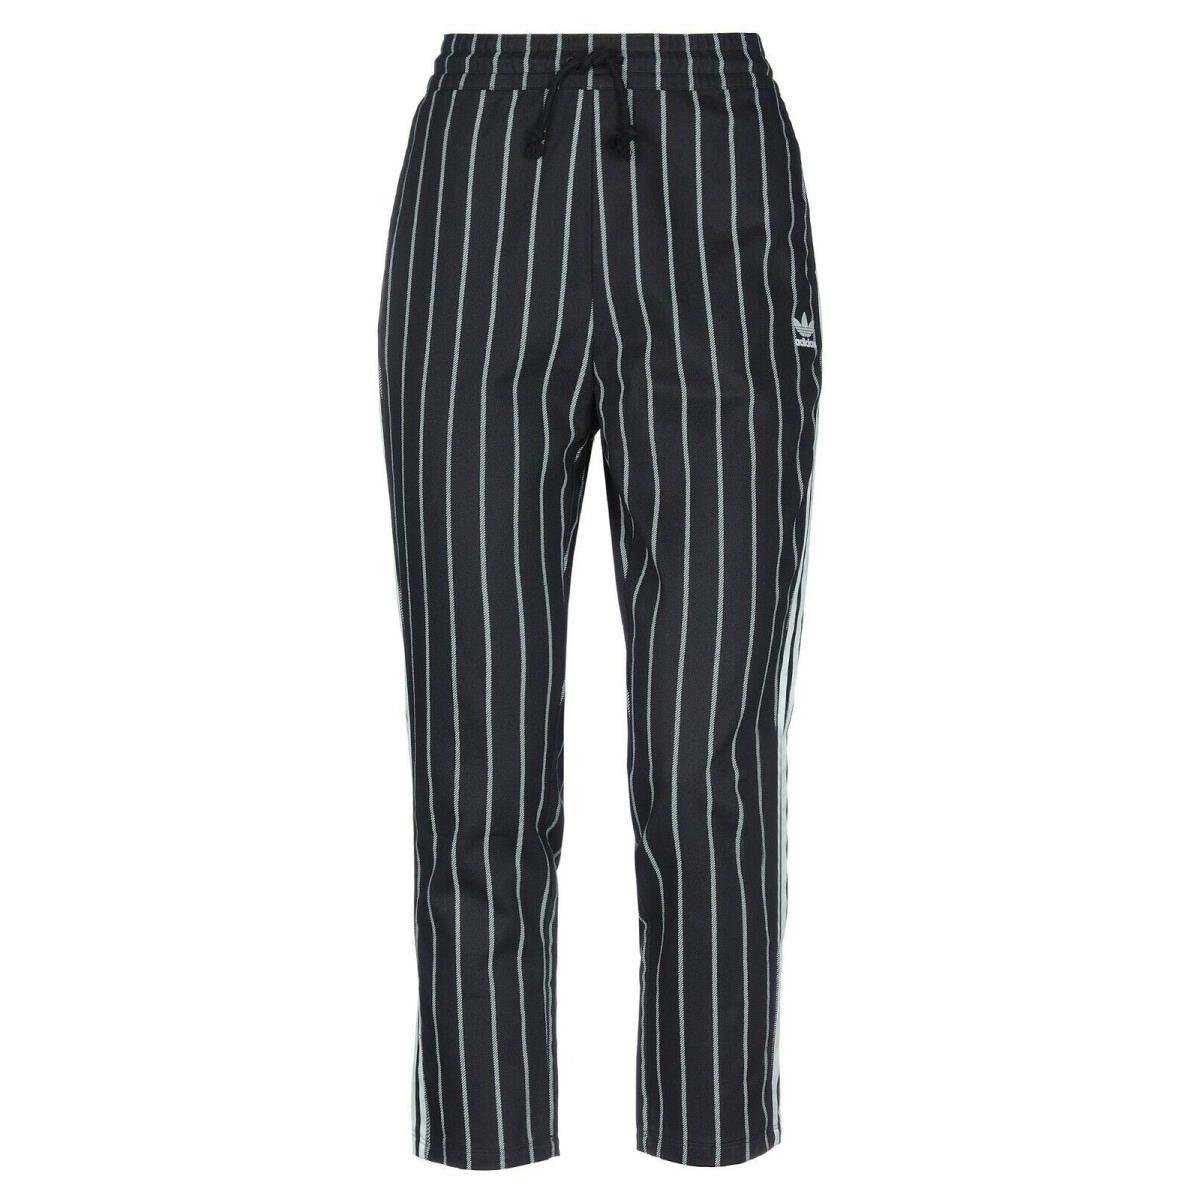 Adidas Women`s Casual Mid Rise Striped Pants Black Gabardine Cotton Size 10 38